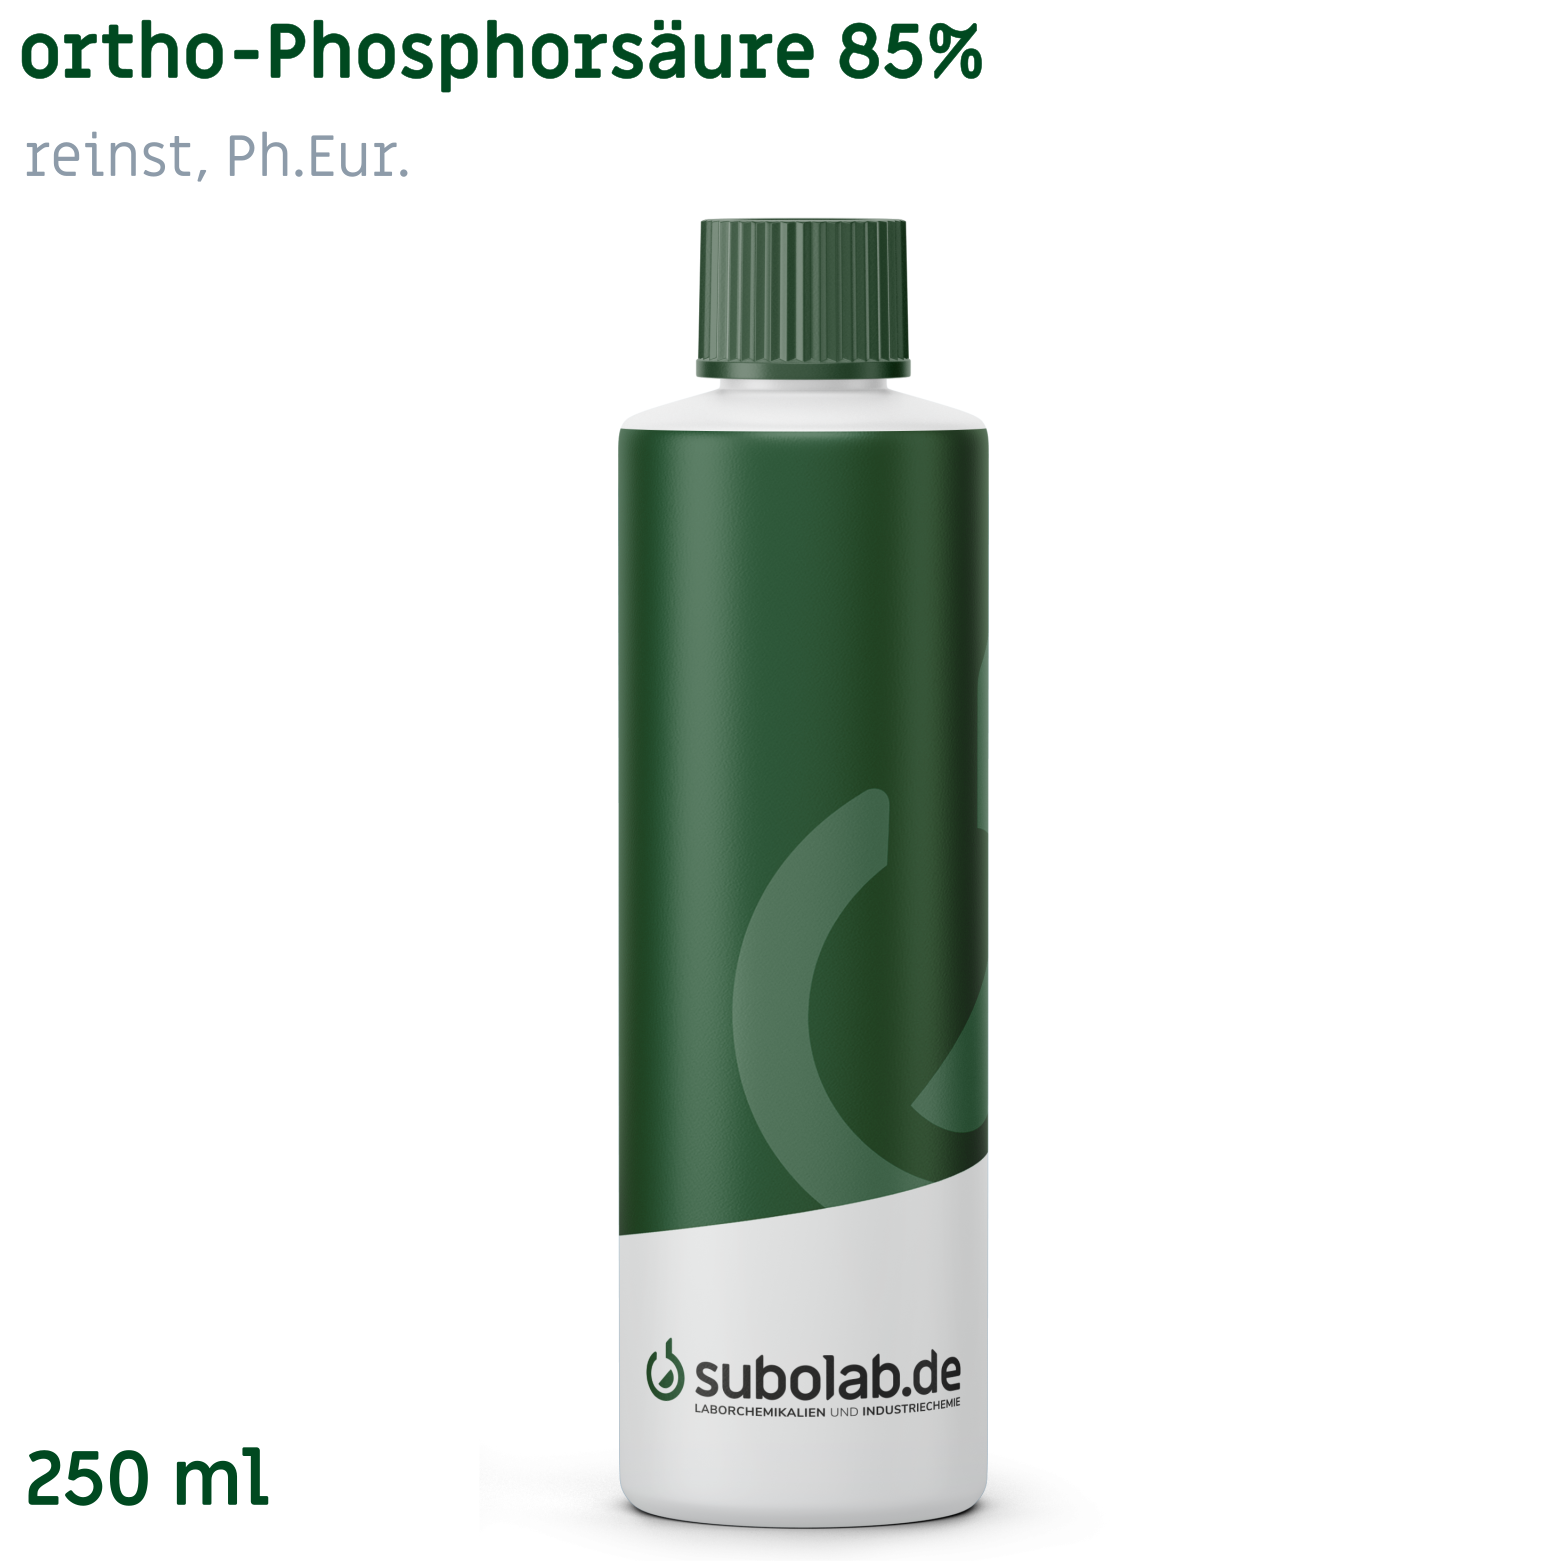 Bild von ortho-Phosphorsäure 85% reinst, Ph.Eur. (250 ml)